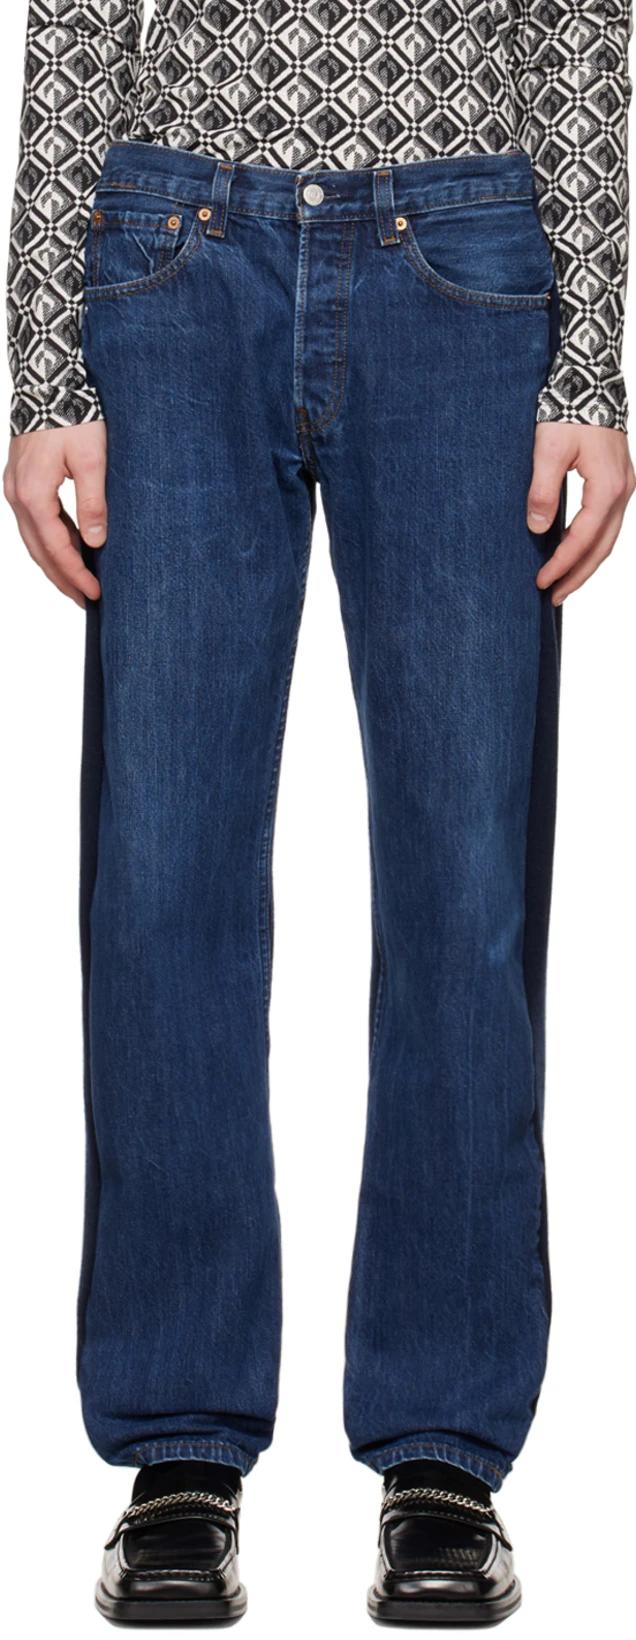 Indigo Jeansfrontjogger Sweatpants by BLESS